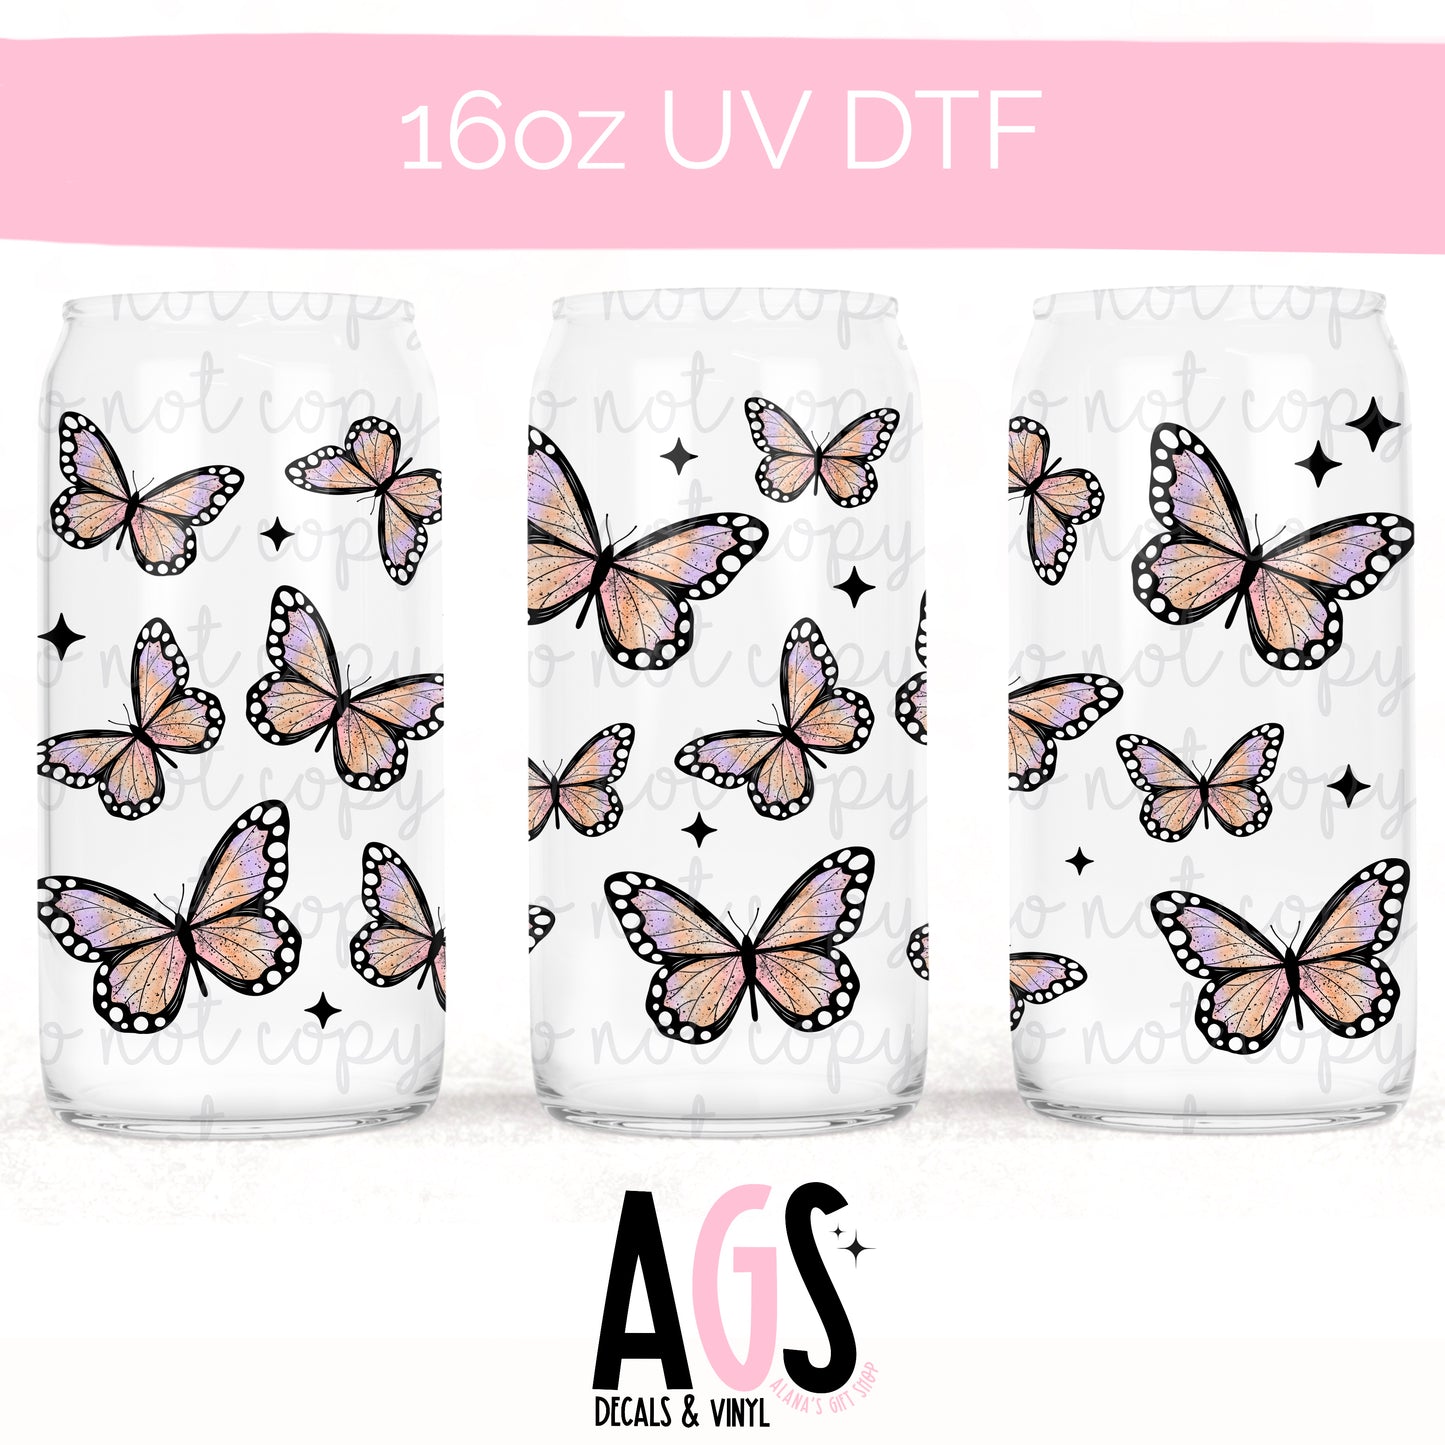 UV DTF- 017 More Butterflies